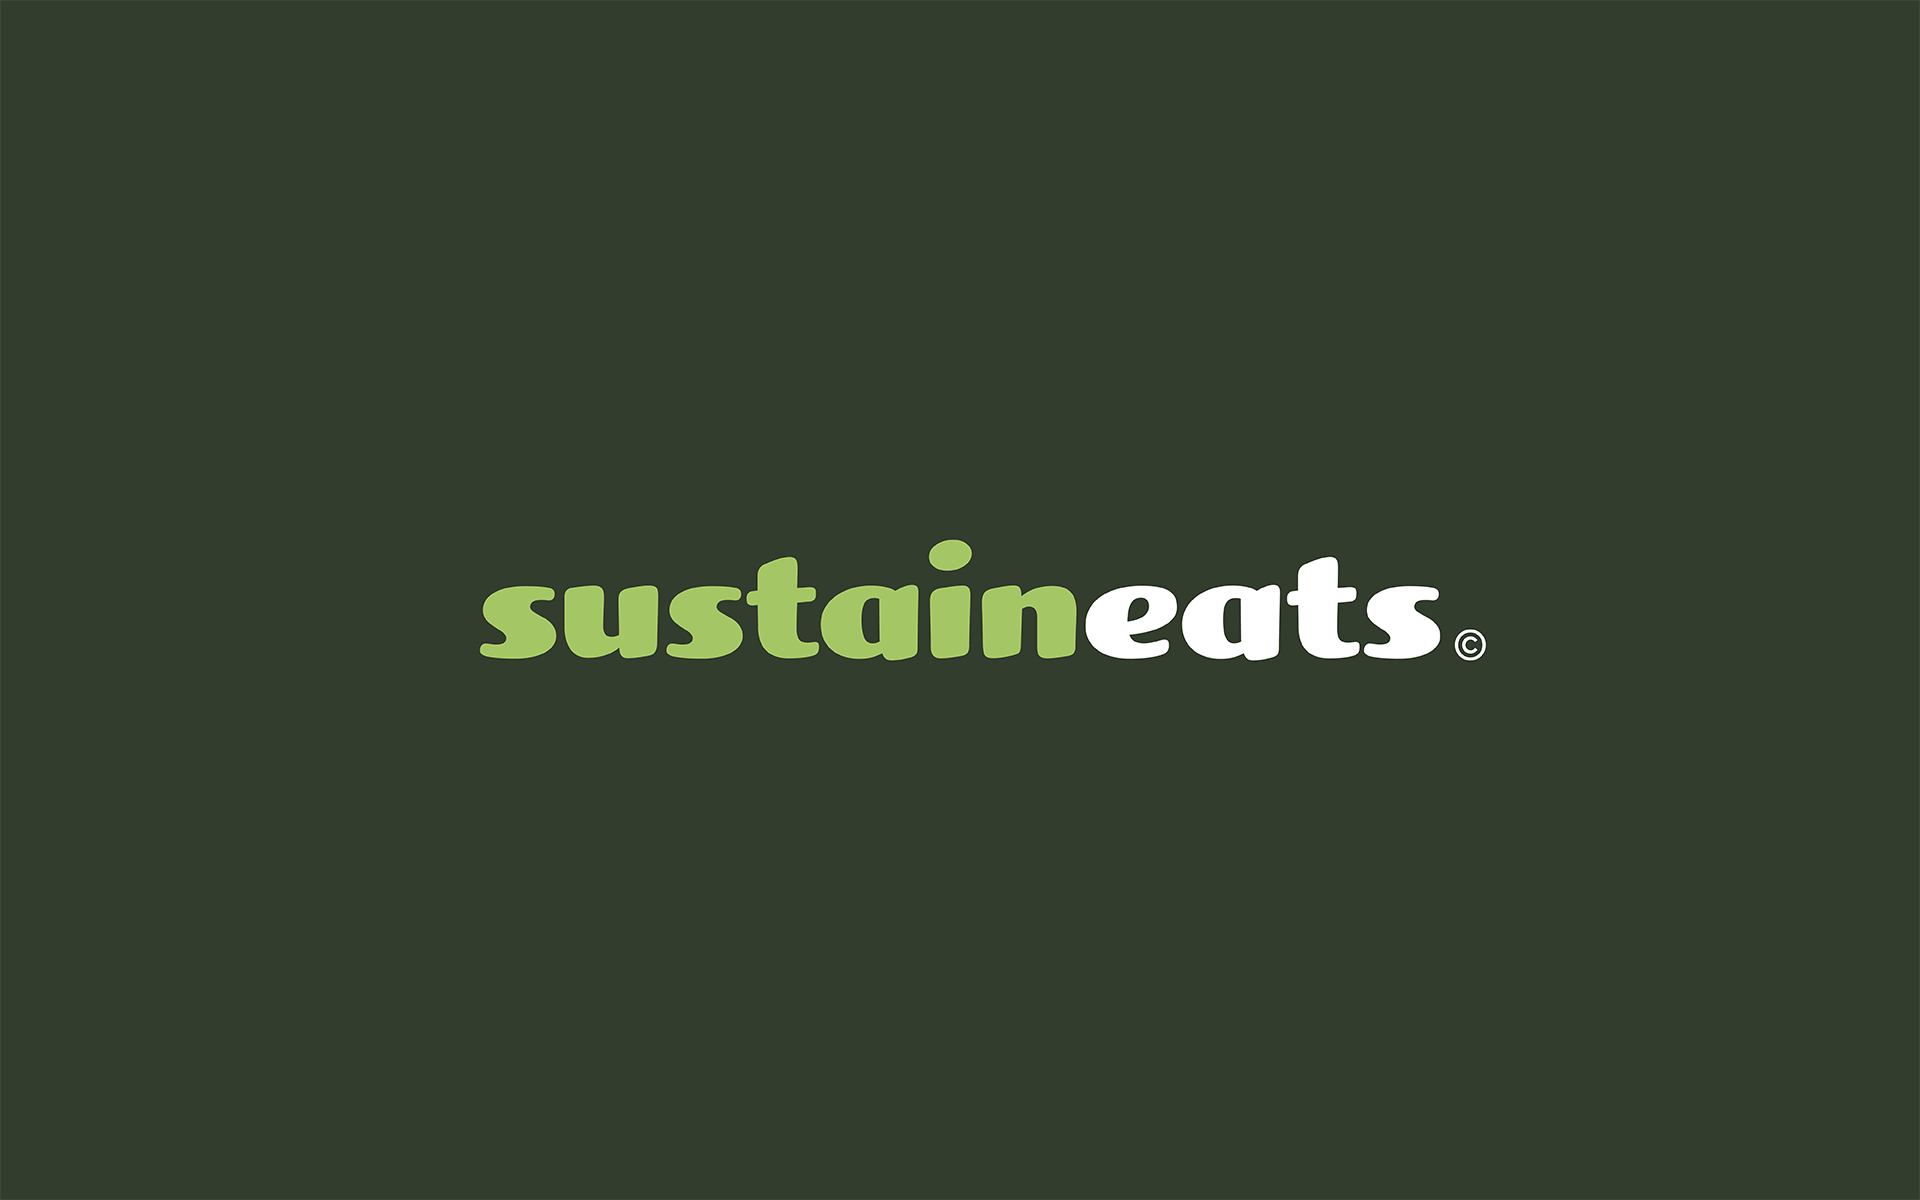 Logotipo da sustainEats em varios fundos e cores diferentes